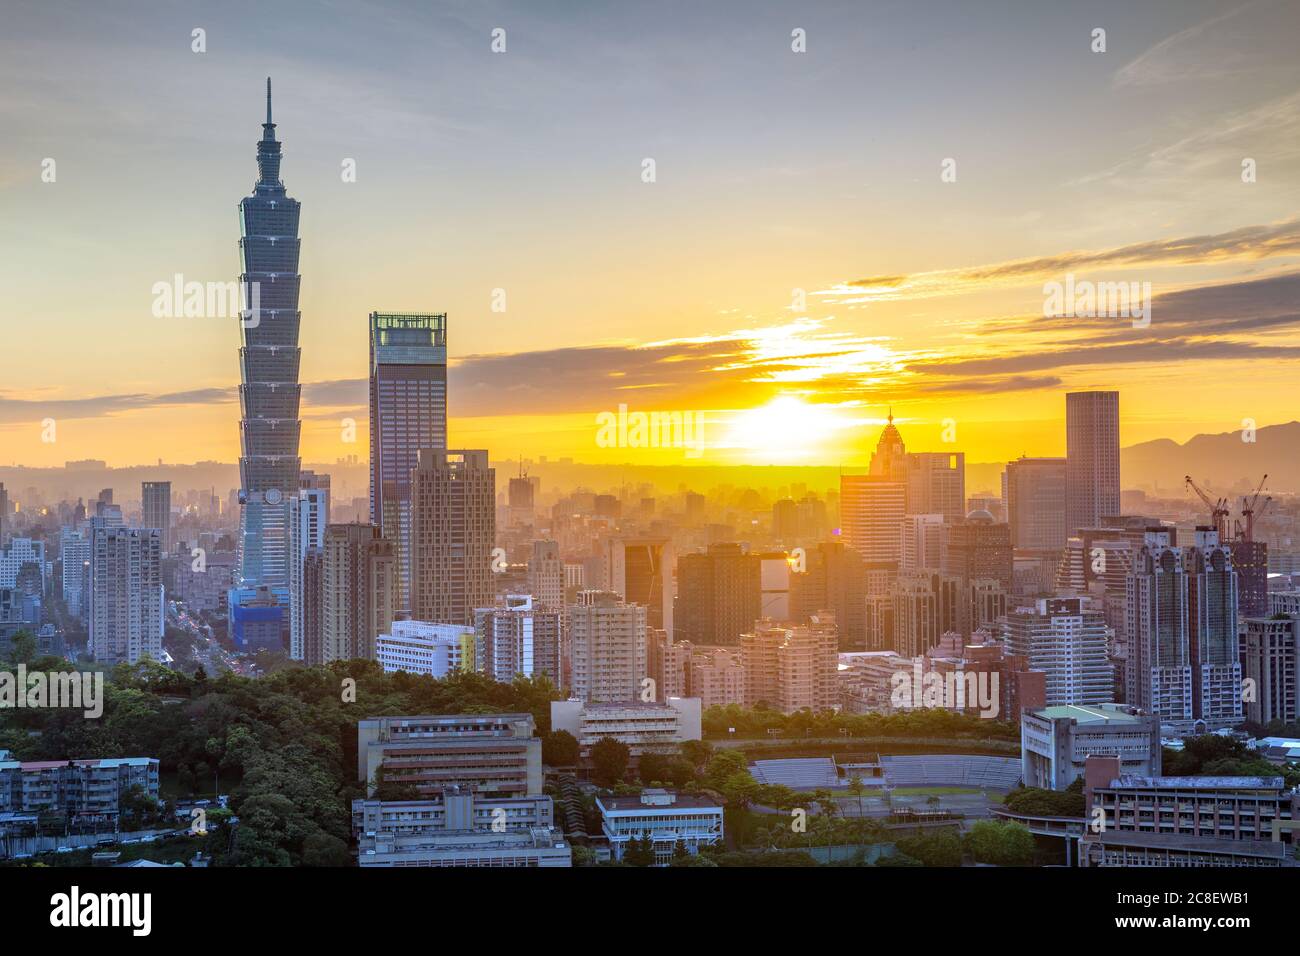 City of Taipei at sunset, Taiwan Stock Photo